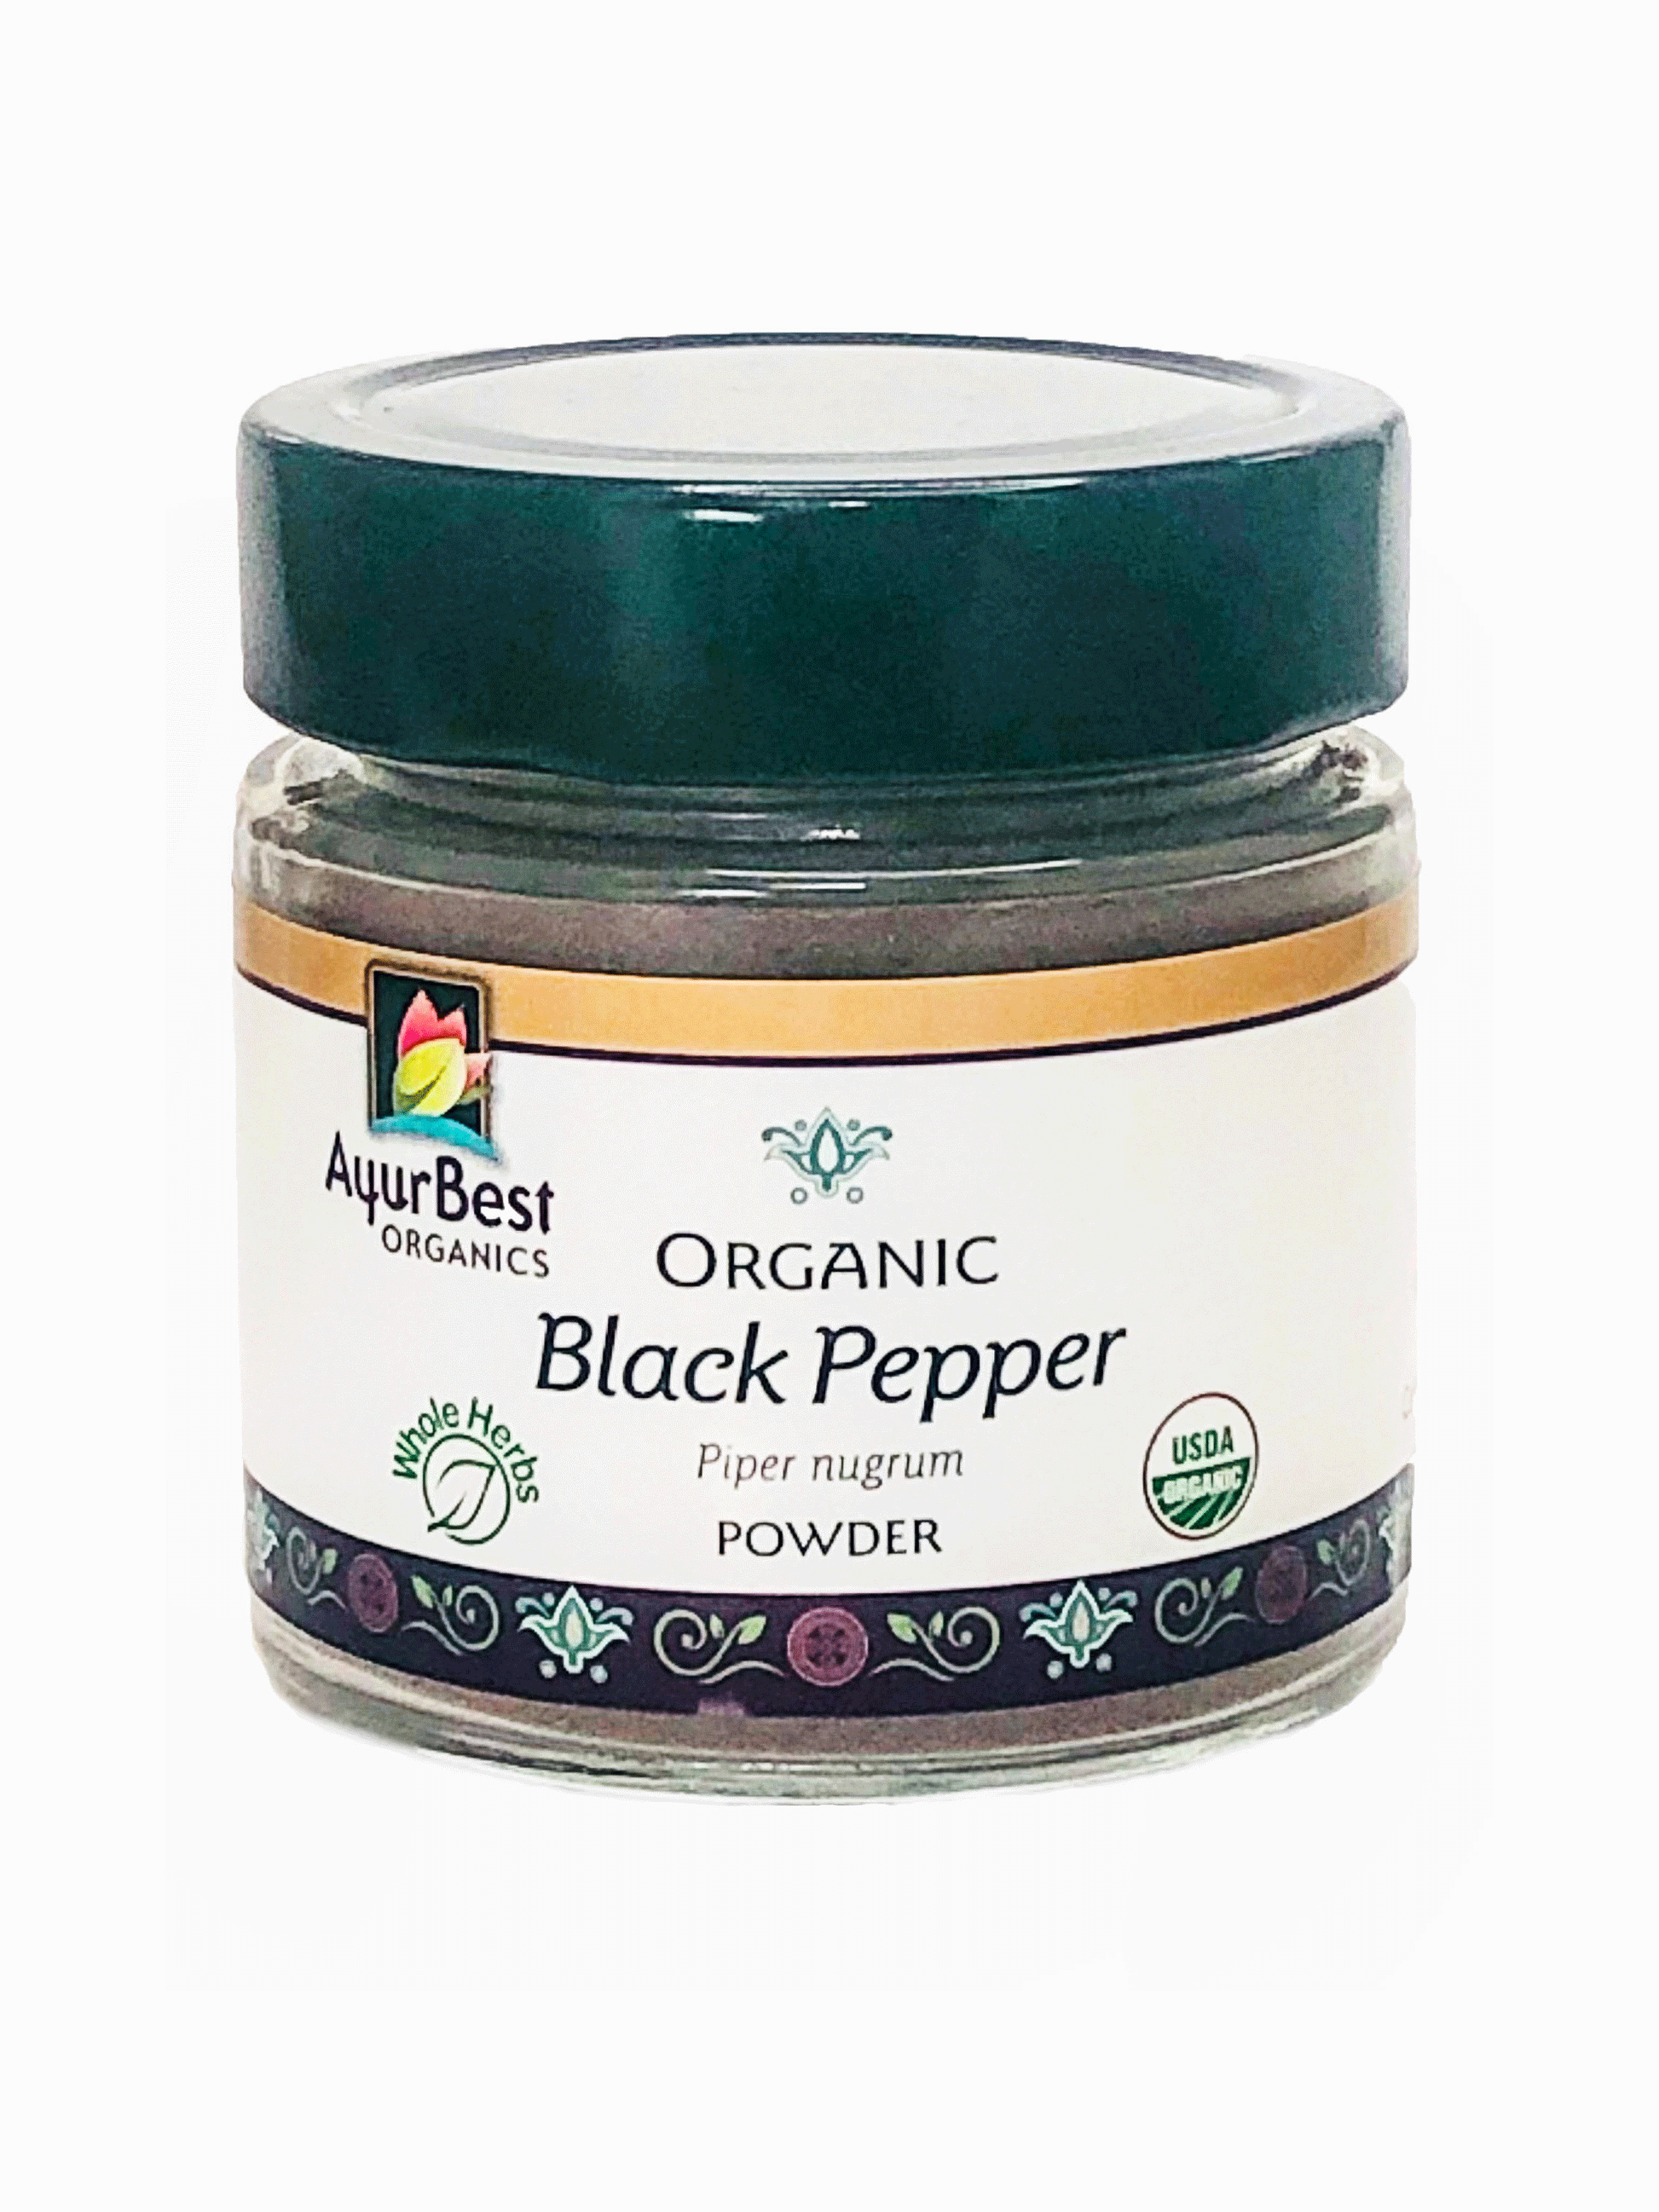 Buy Organic Black Pepper in 3.7oz Jar!